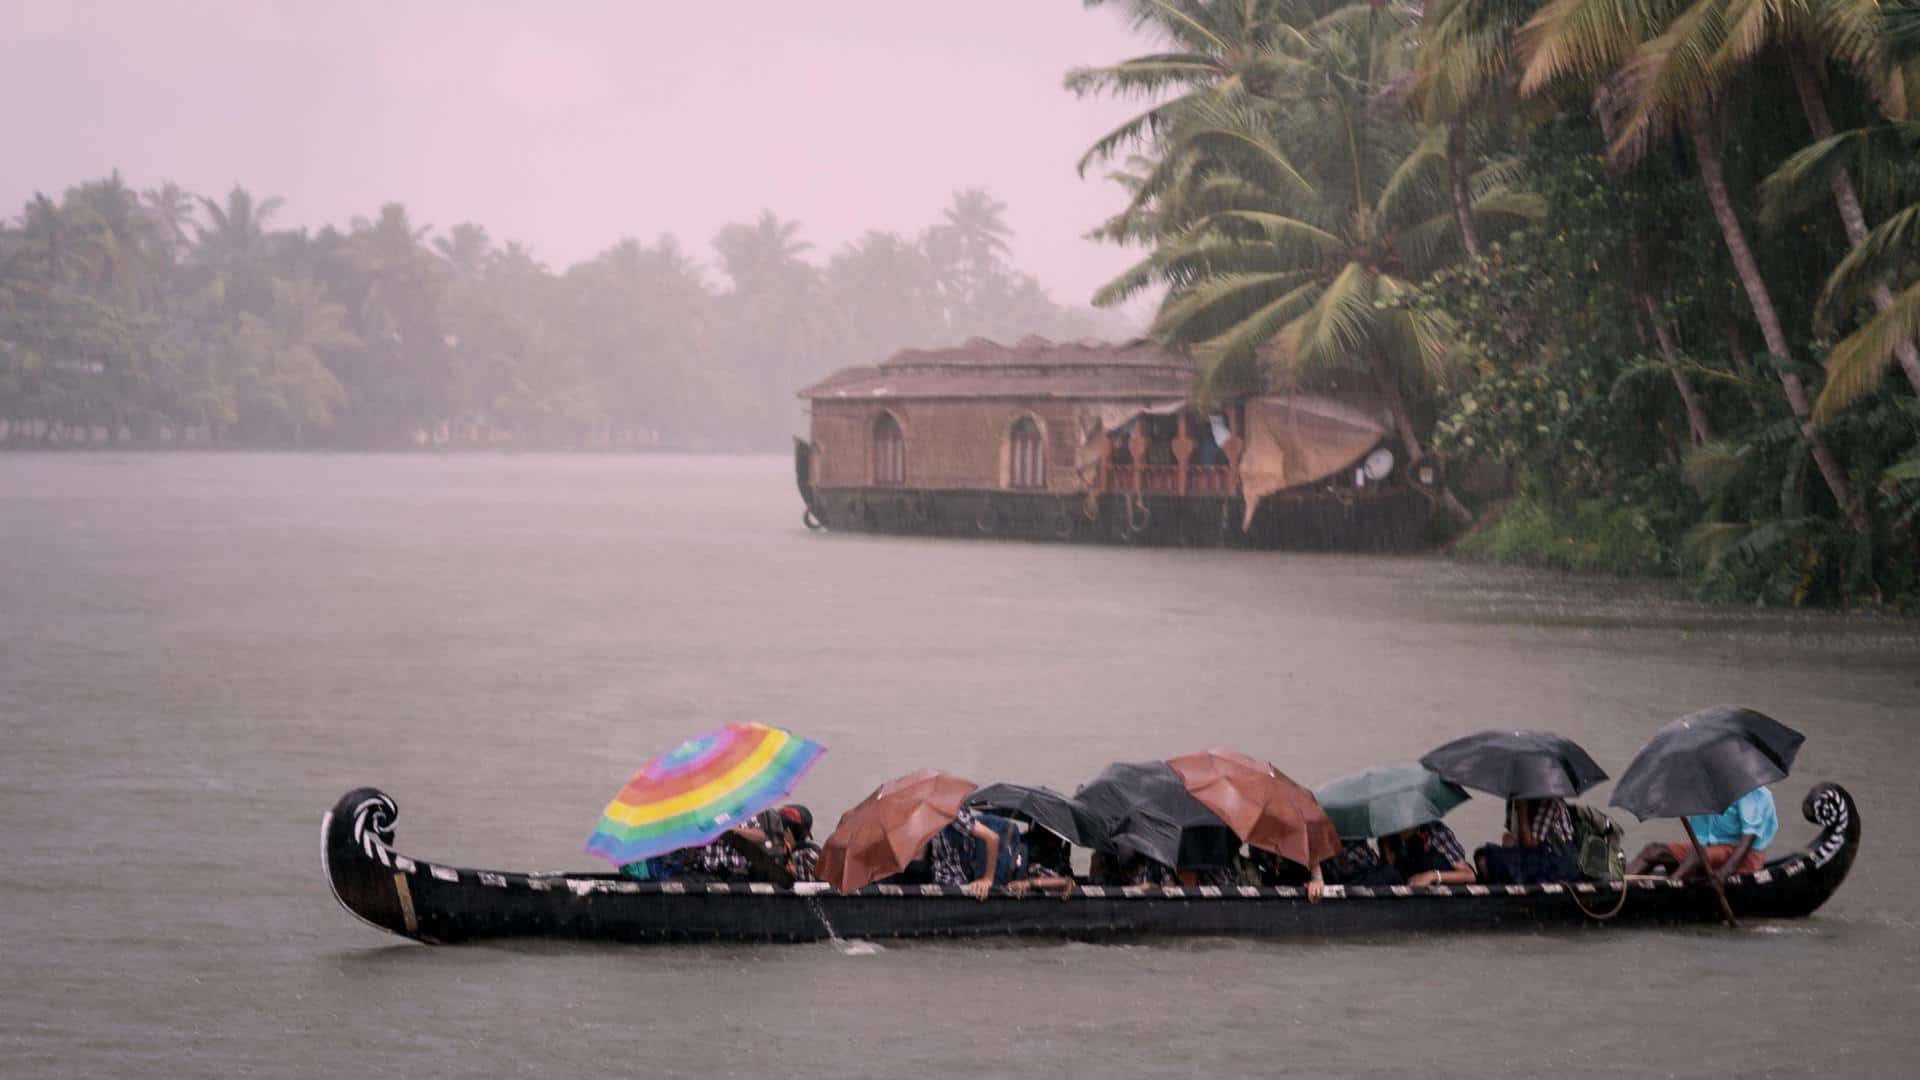 Monsoon arrives in Kerala after a week's delay: IMD